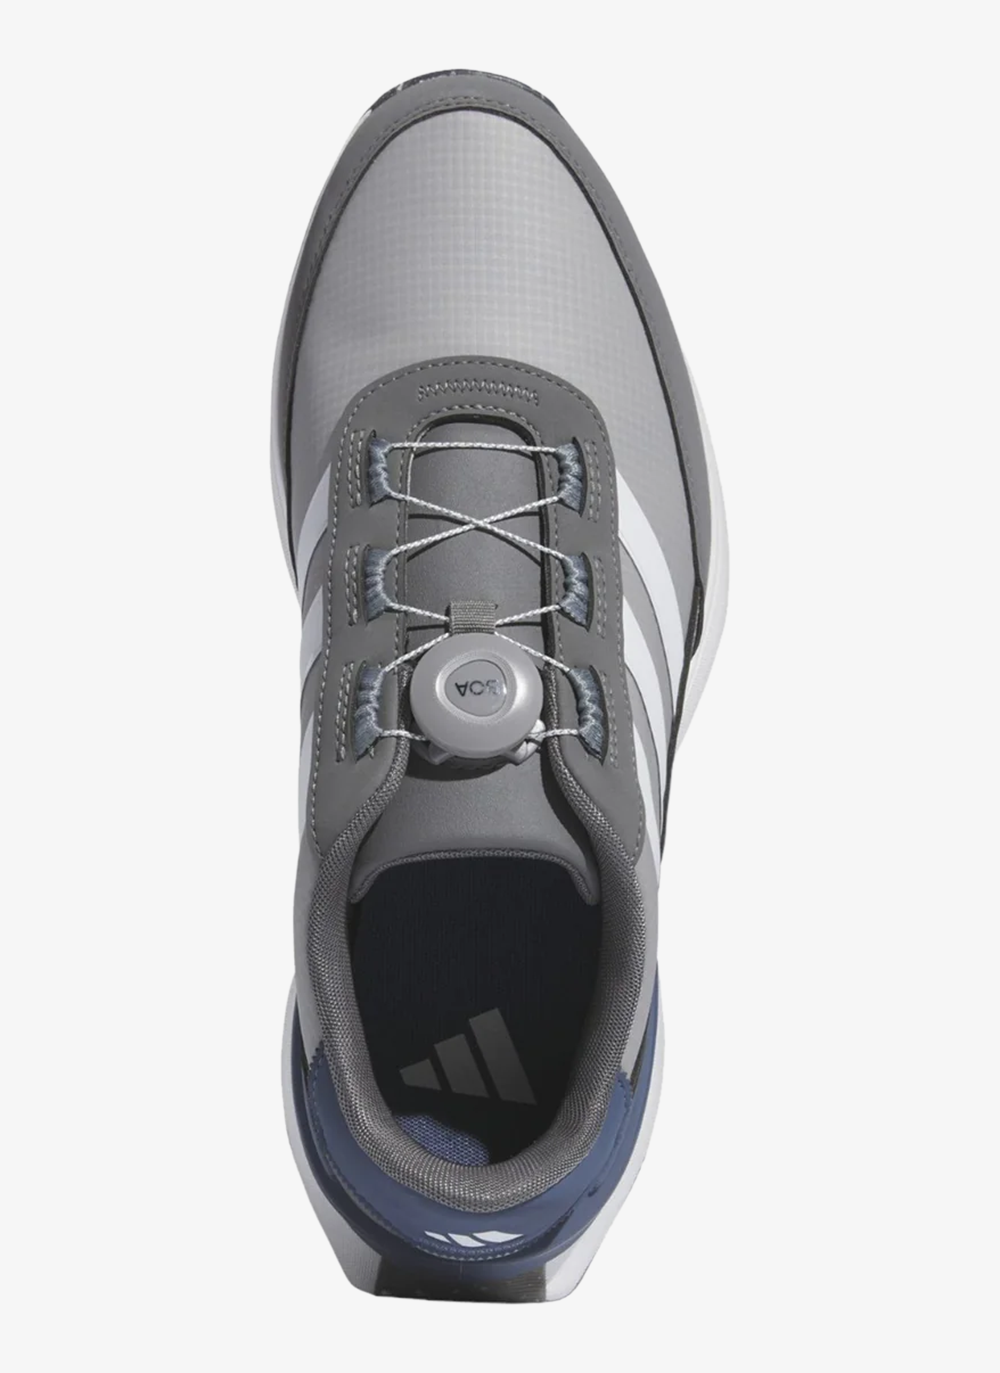 adidas S2G SL BOA Golf Shoes IG0882